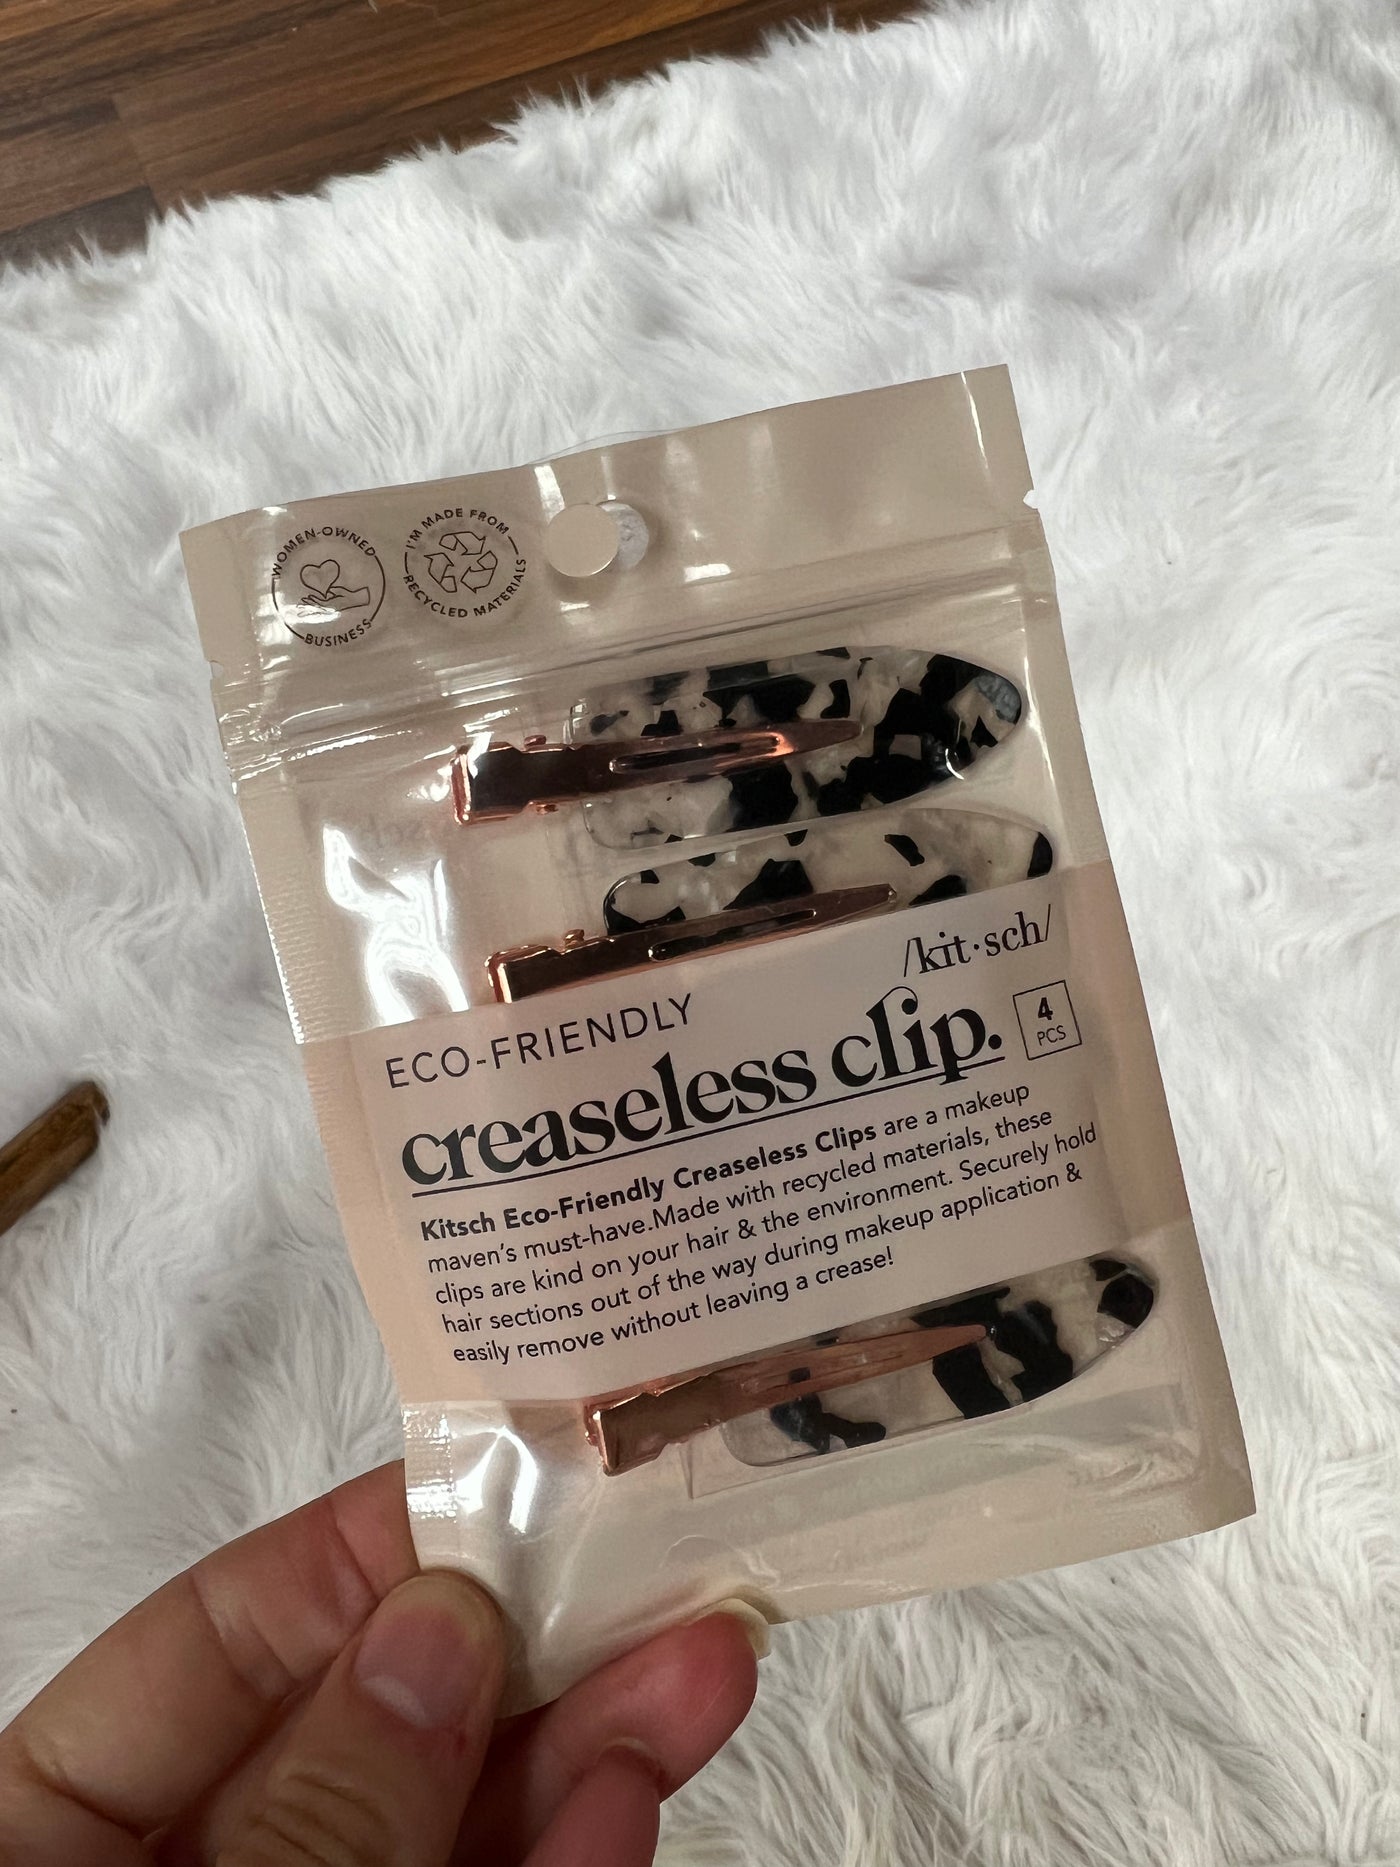 Creaseless Hair Clips (Kitsch)